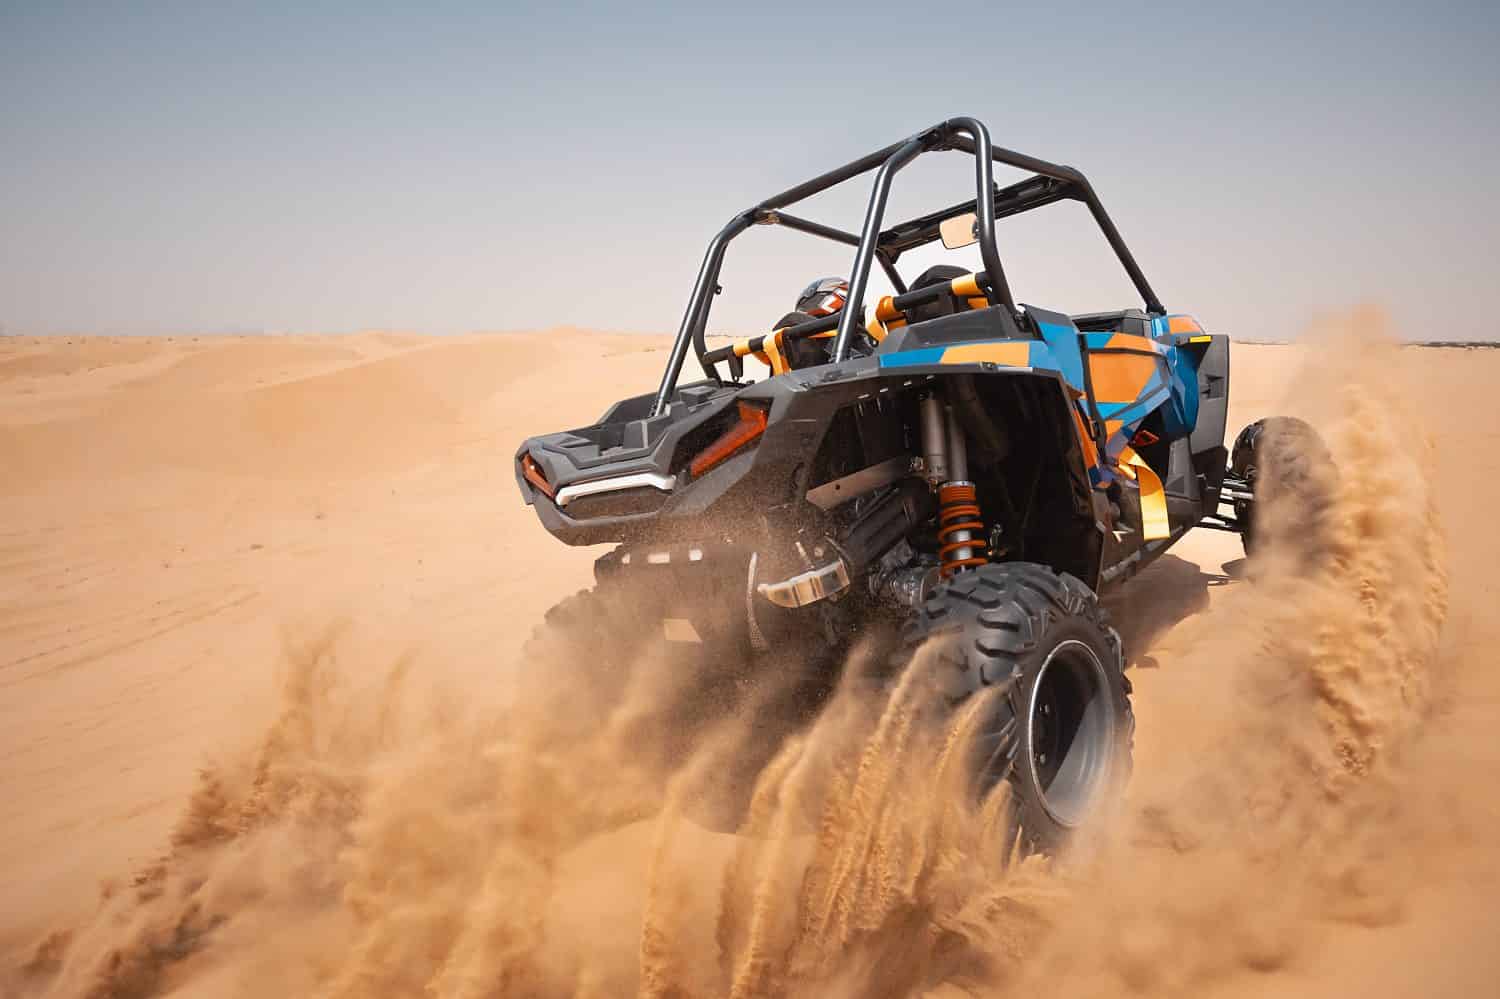 sand dune bashing ofrroad. utv rally buggy